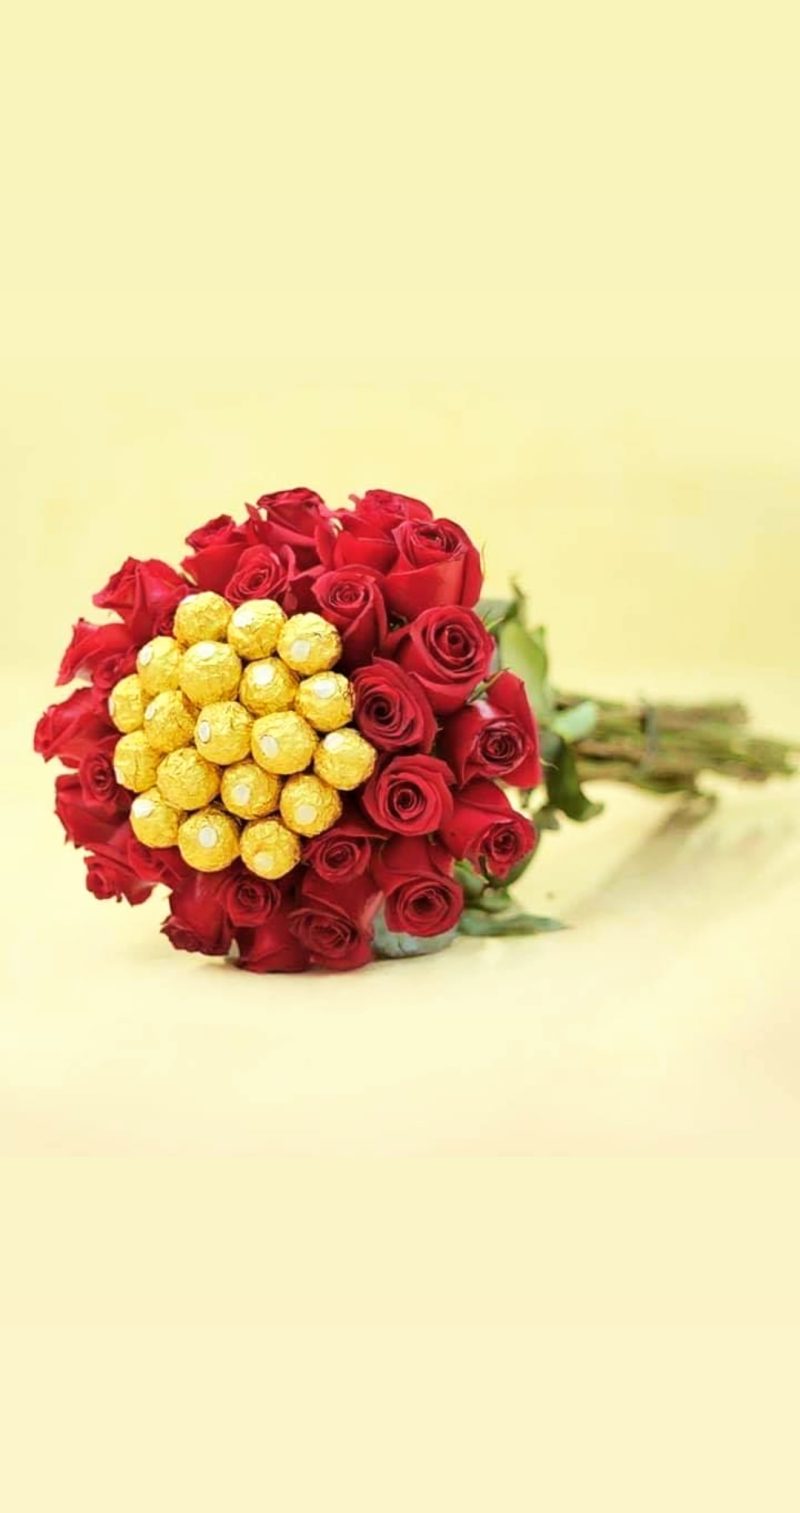 Send Valentine Roses to Pakistan - SendFlowers.pk